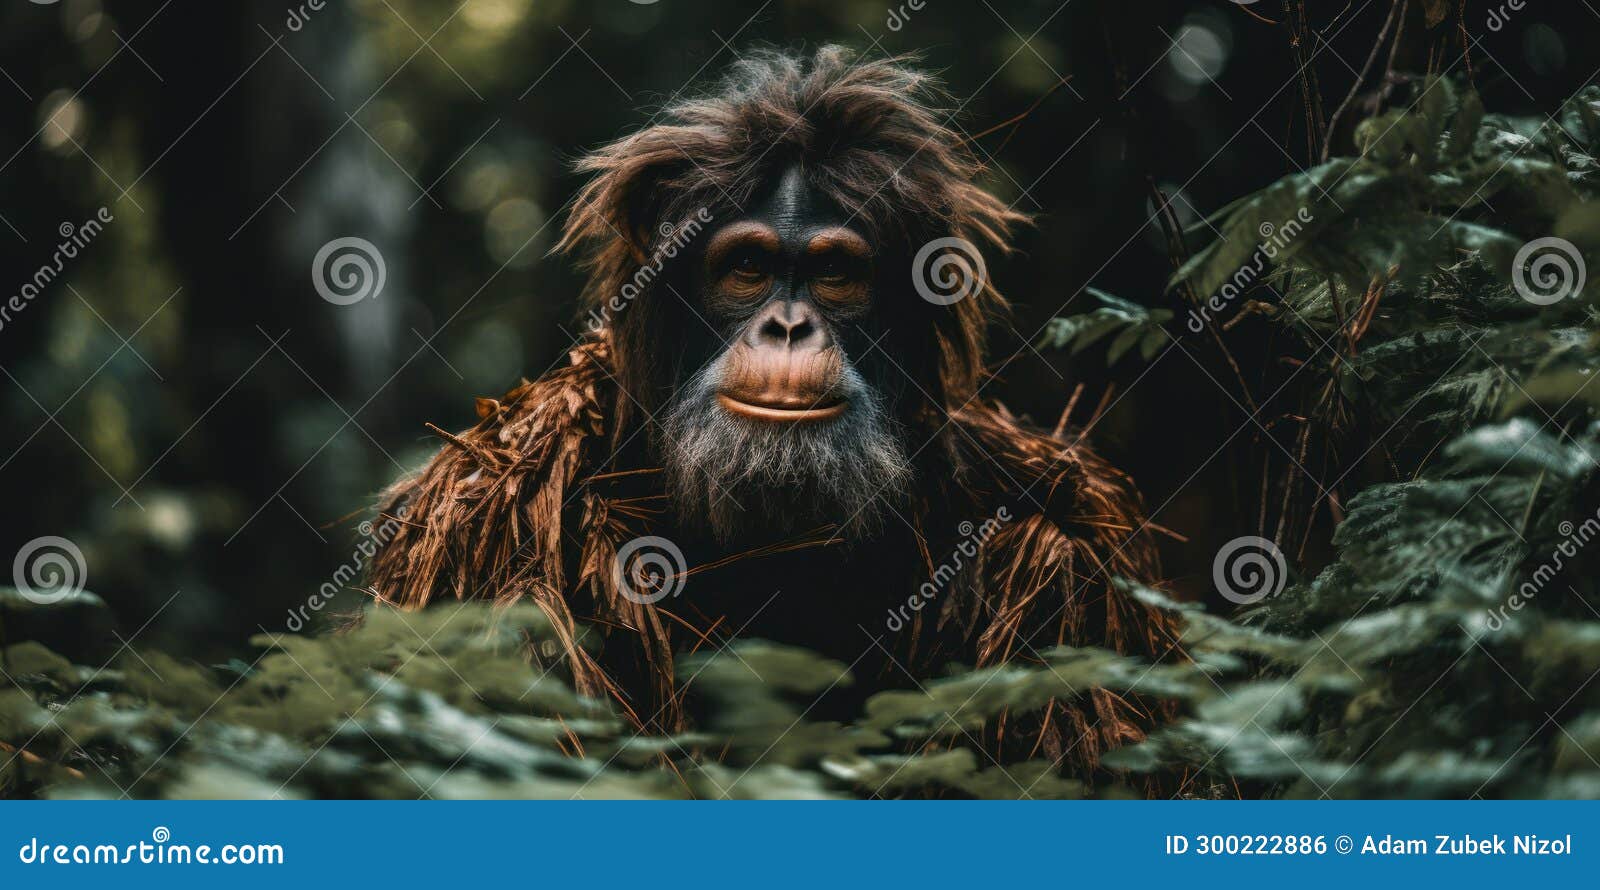 A monkey in a fur coat stock illustration. Illustration of brown ...